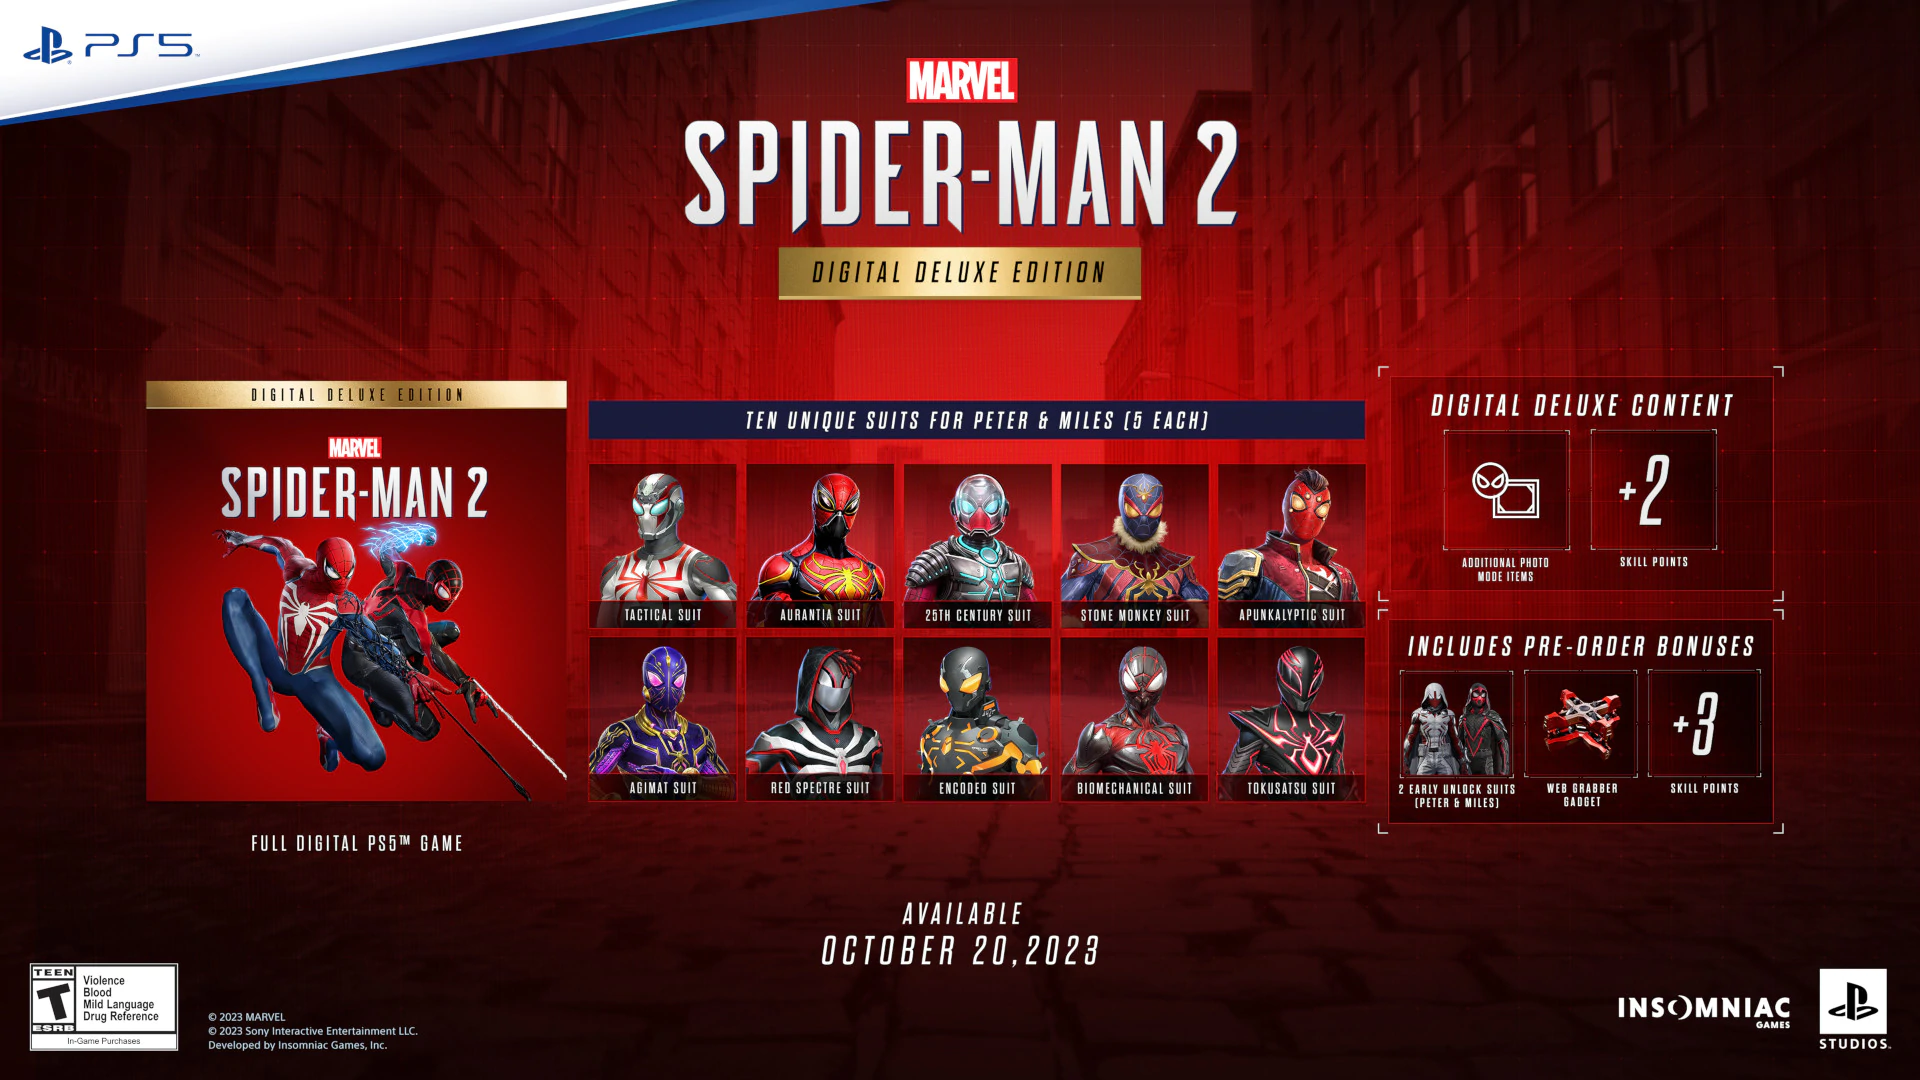 marvels spider man 2 digital deluxe edition | Spider-Man 2 | เก็บเงินรอ Marvel’s Spider-Man 2 มีกำหนดวางขาย 20 ตุลาคม 2023 บน PS5 พร้อมเผยชุดสะสมน่าโดนสุดๆ